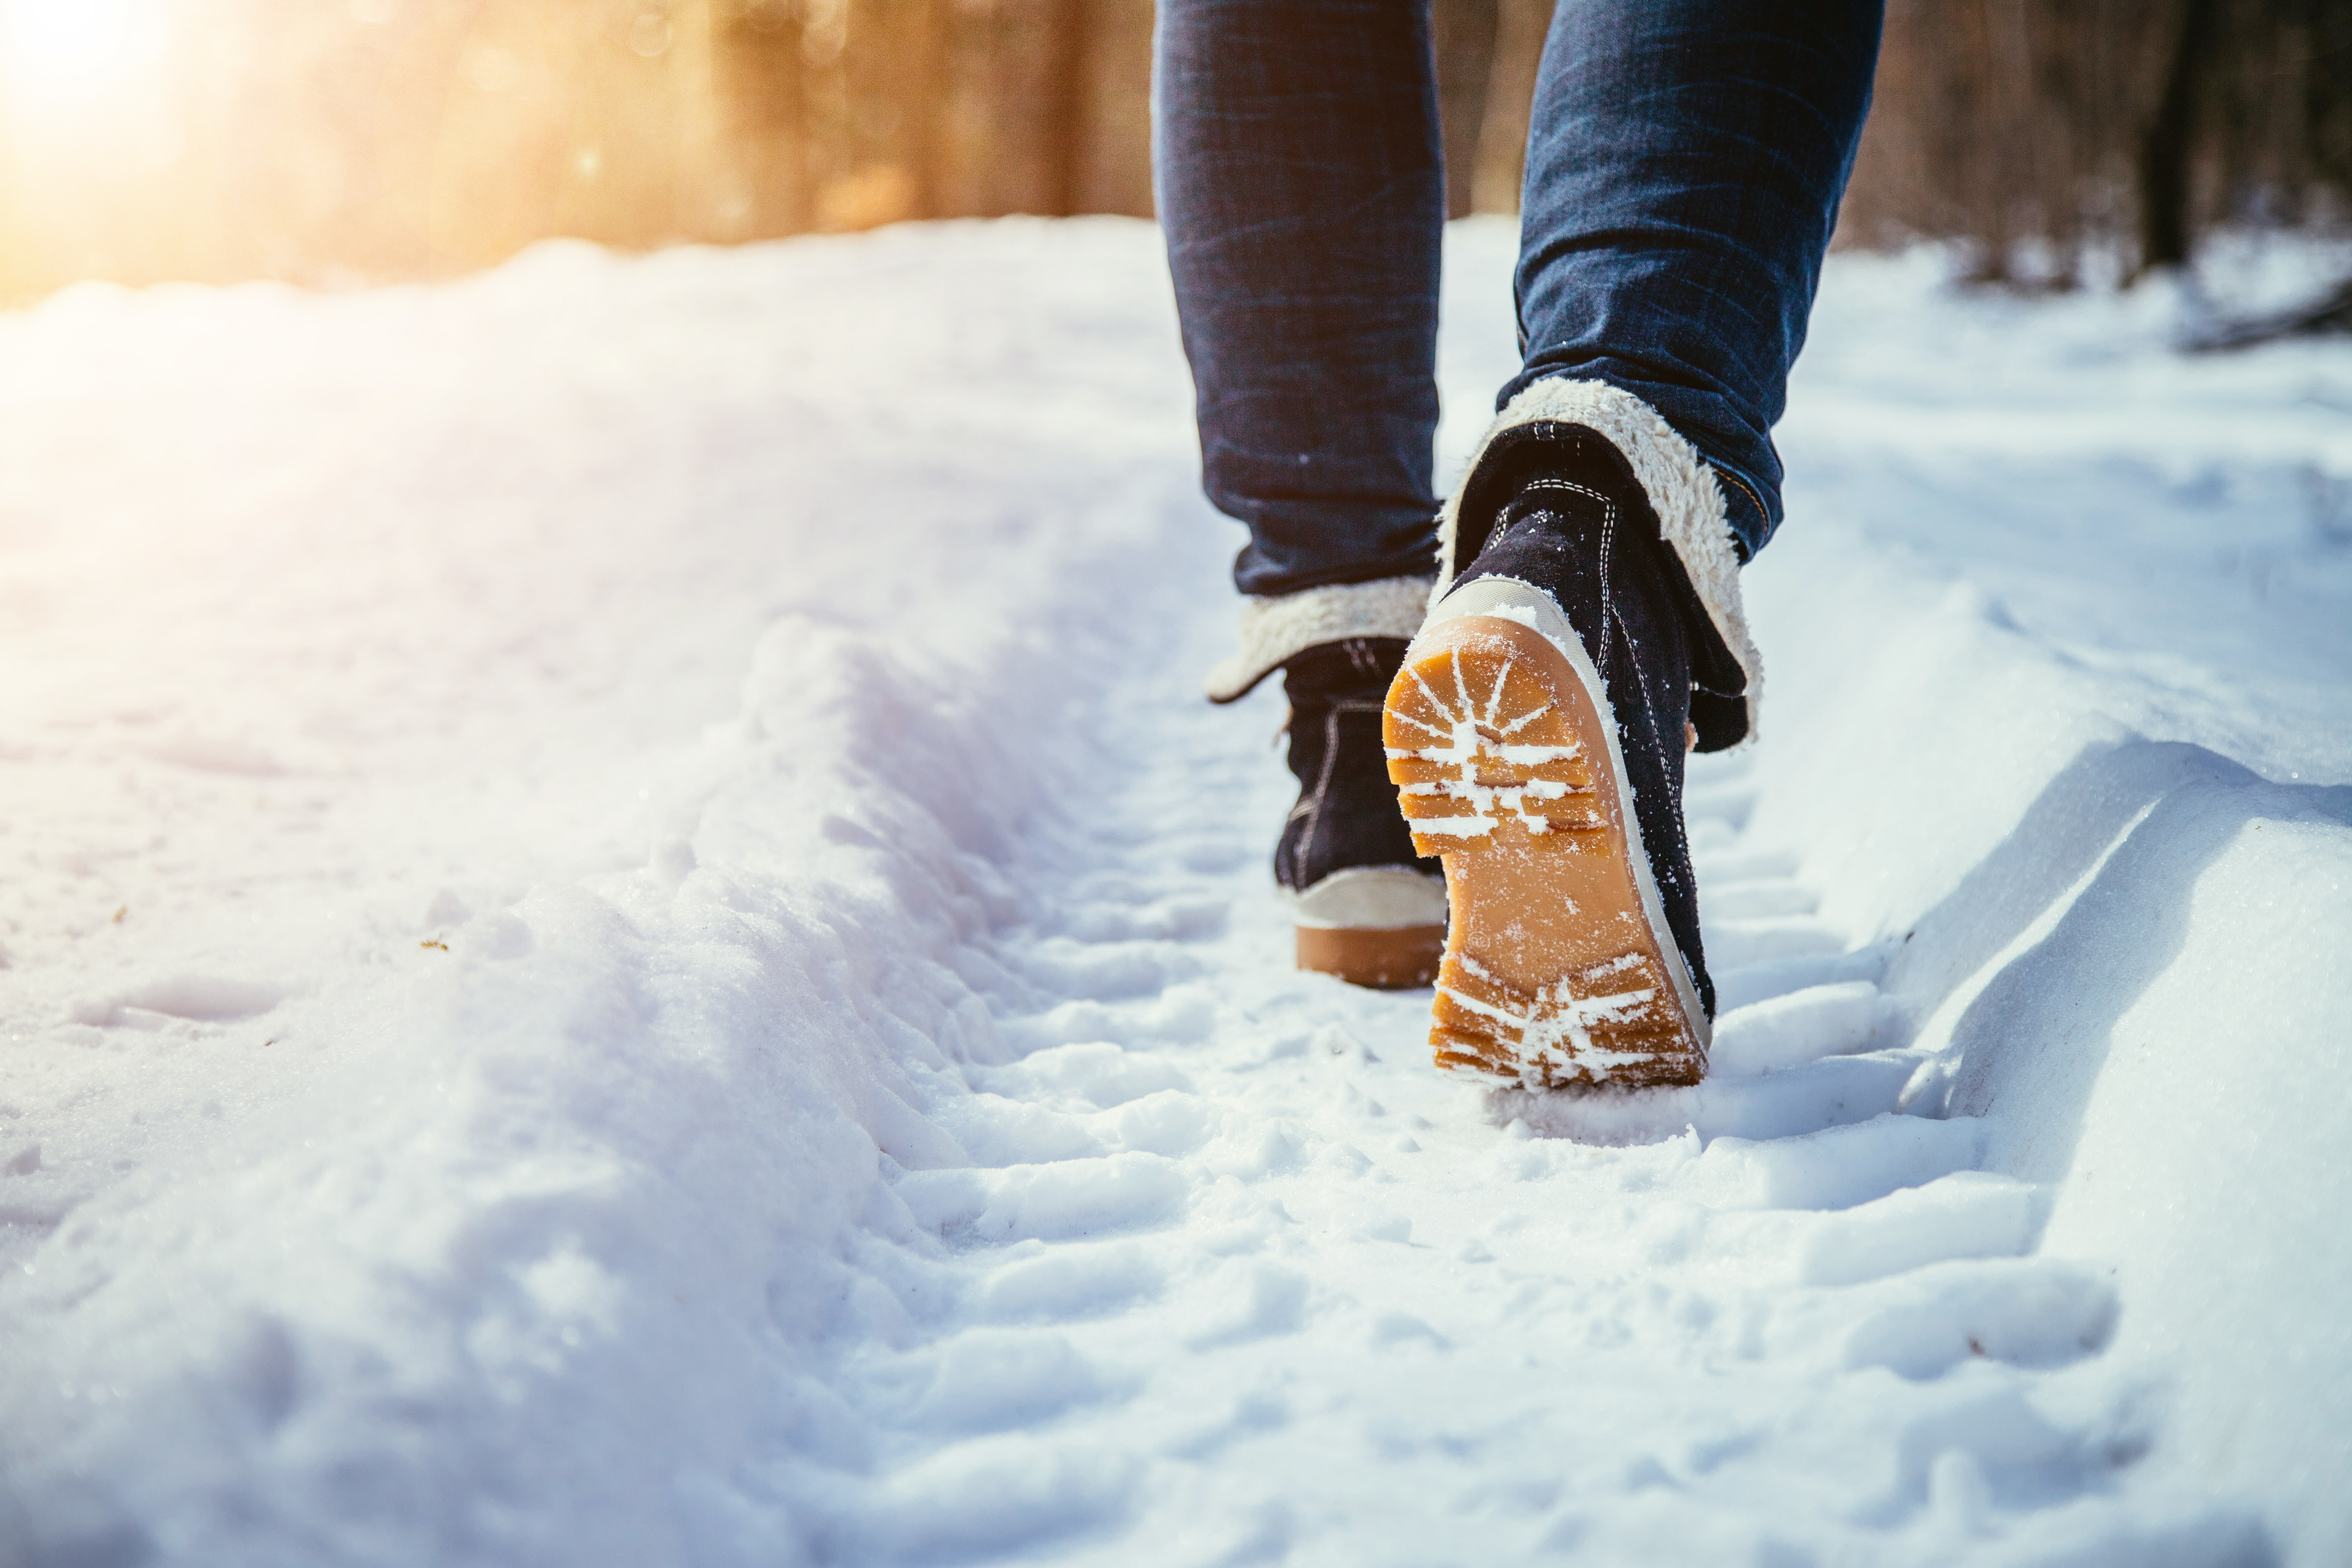 Walking snow rum перевод. Обувь для прогулки по снегу. Прогулка зима ноги. Зимняя обувь на ноге зимой. Лед под ногами.